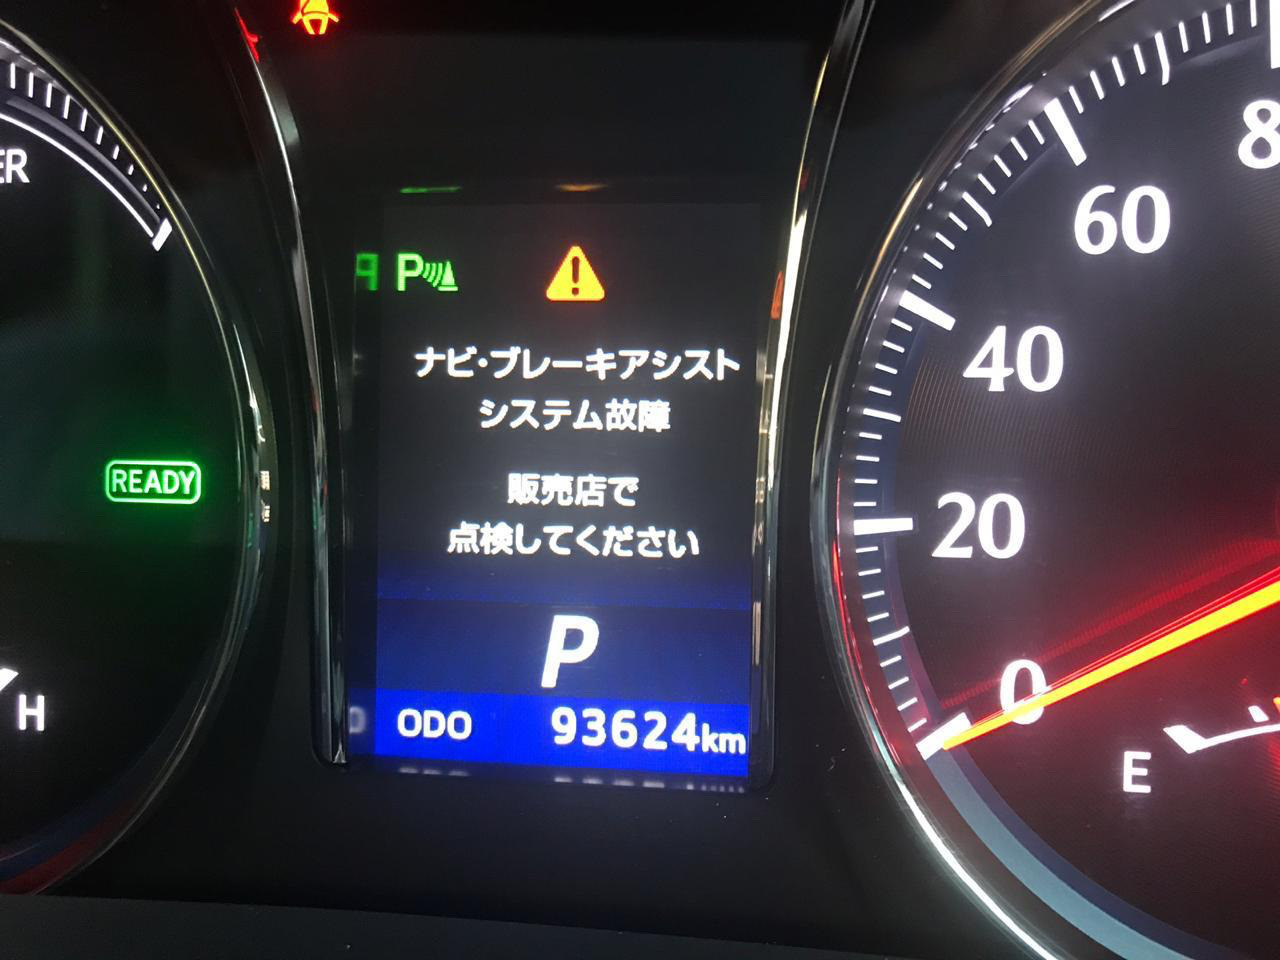 Ошибки на гибридах. Toyota Crown 210 датчик торможения. Что такое ерв в Камри. С0210 ошибка Тойота. Ошибки 210 Крауна.